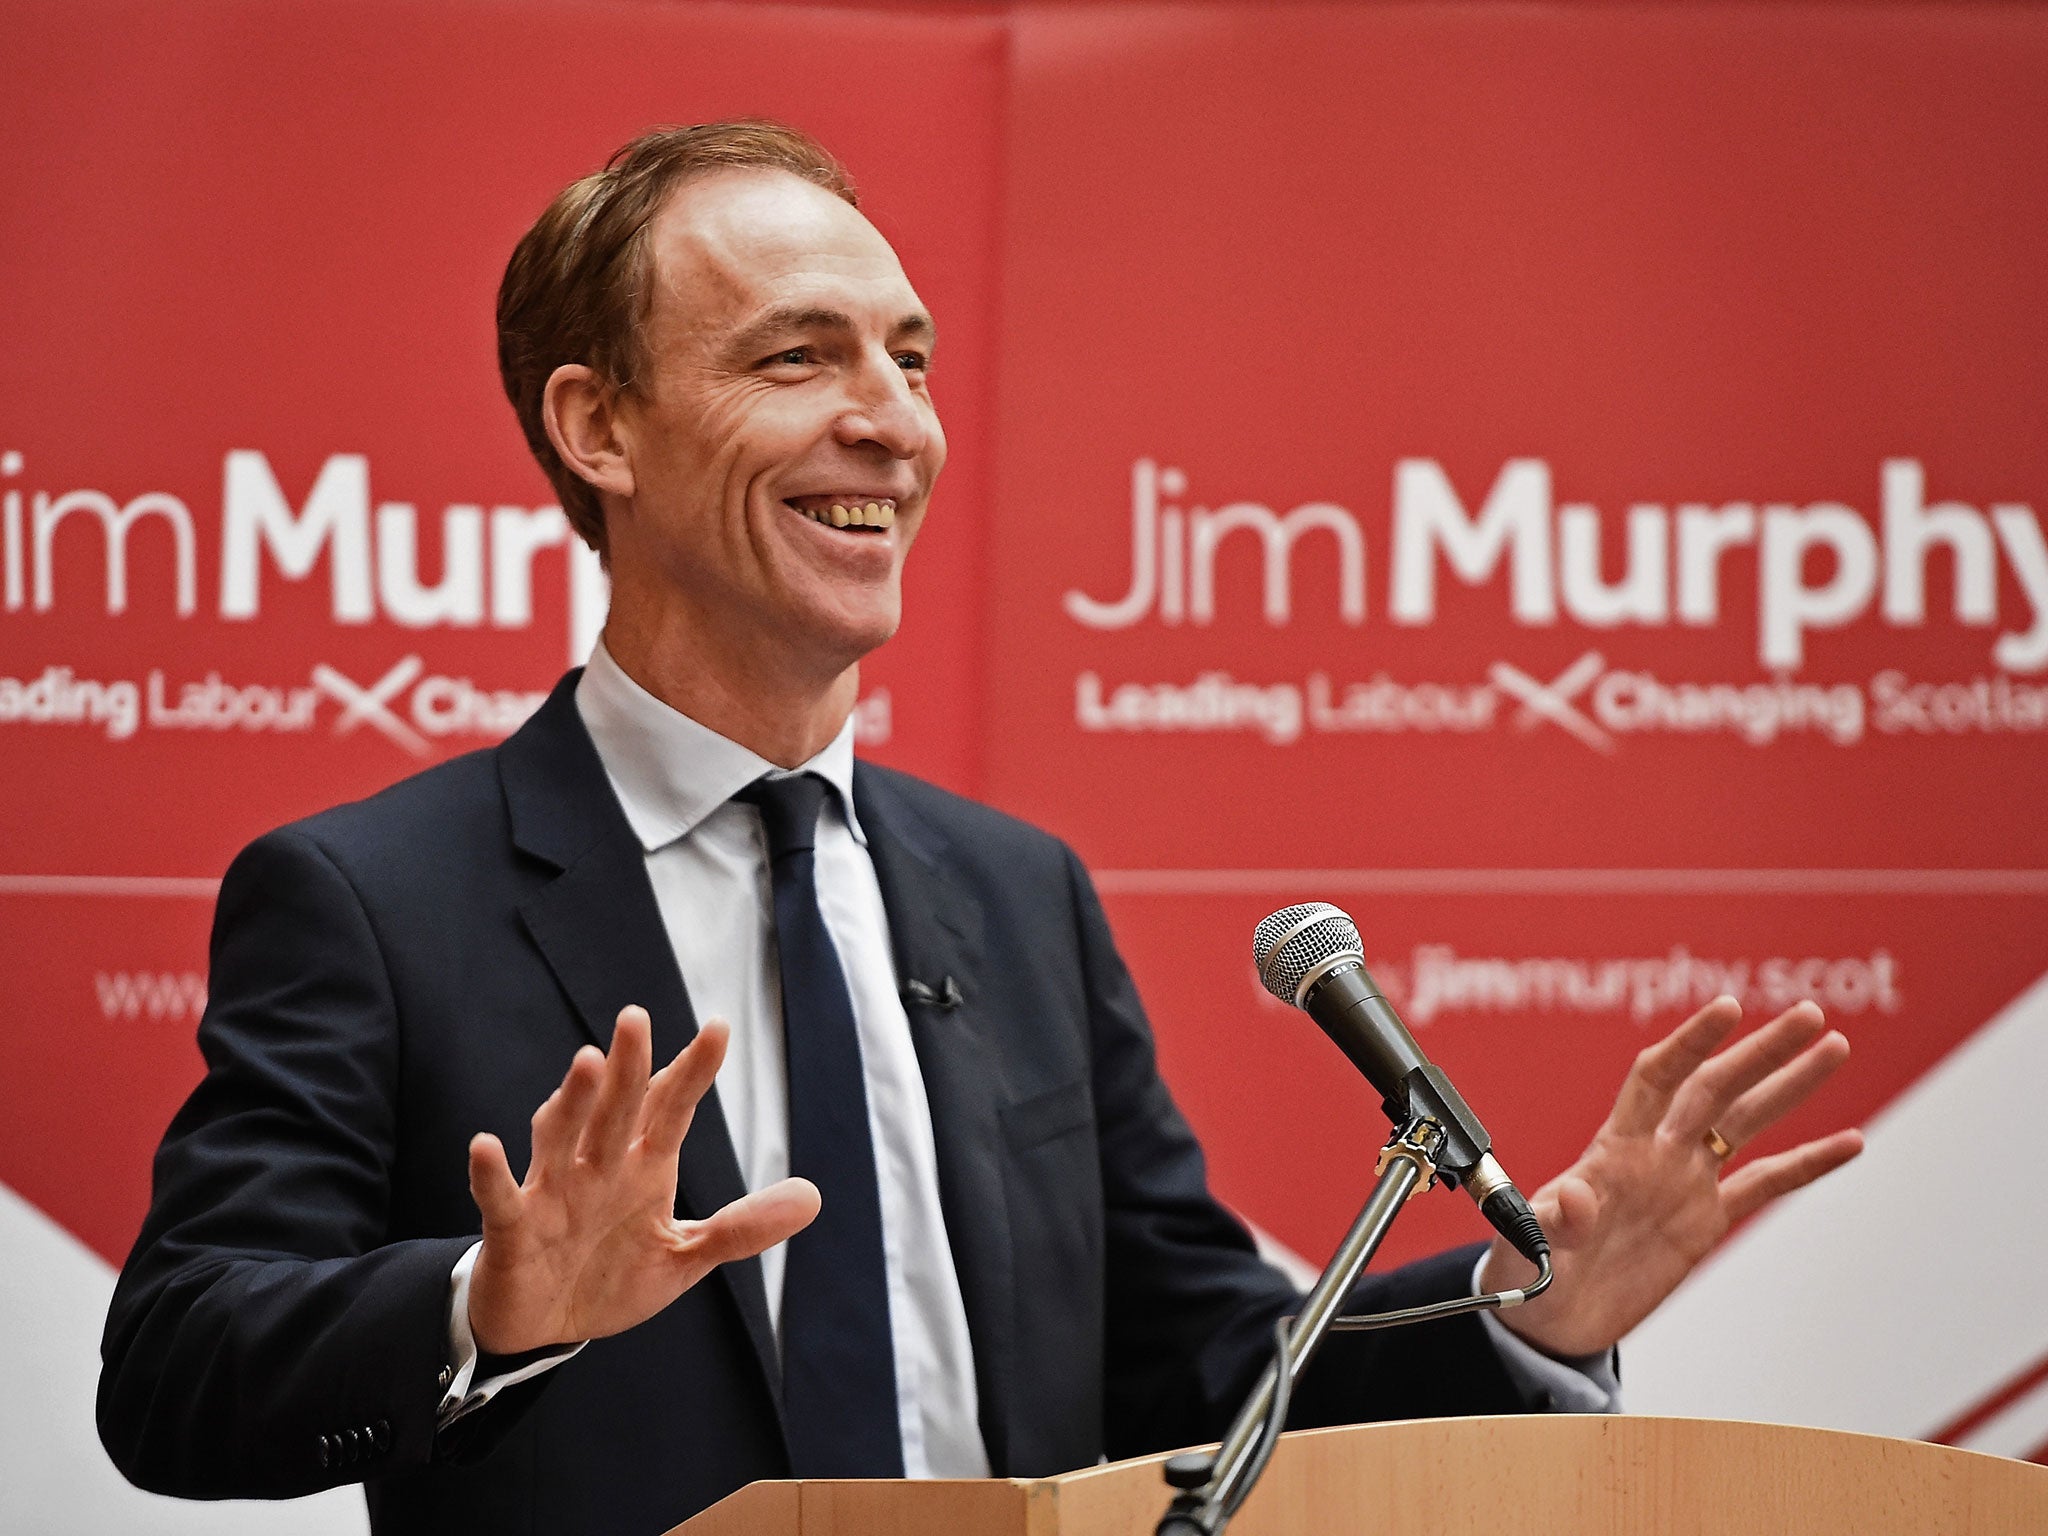 Jim Murphy, the leader of Scottish Labour